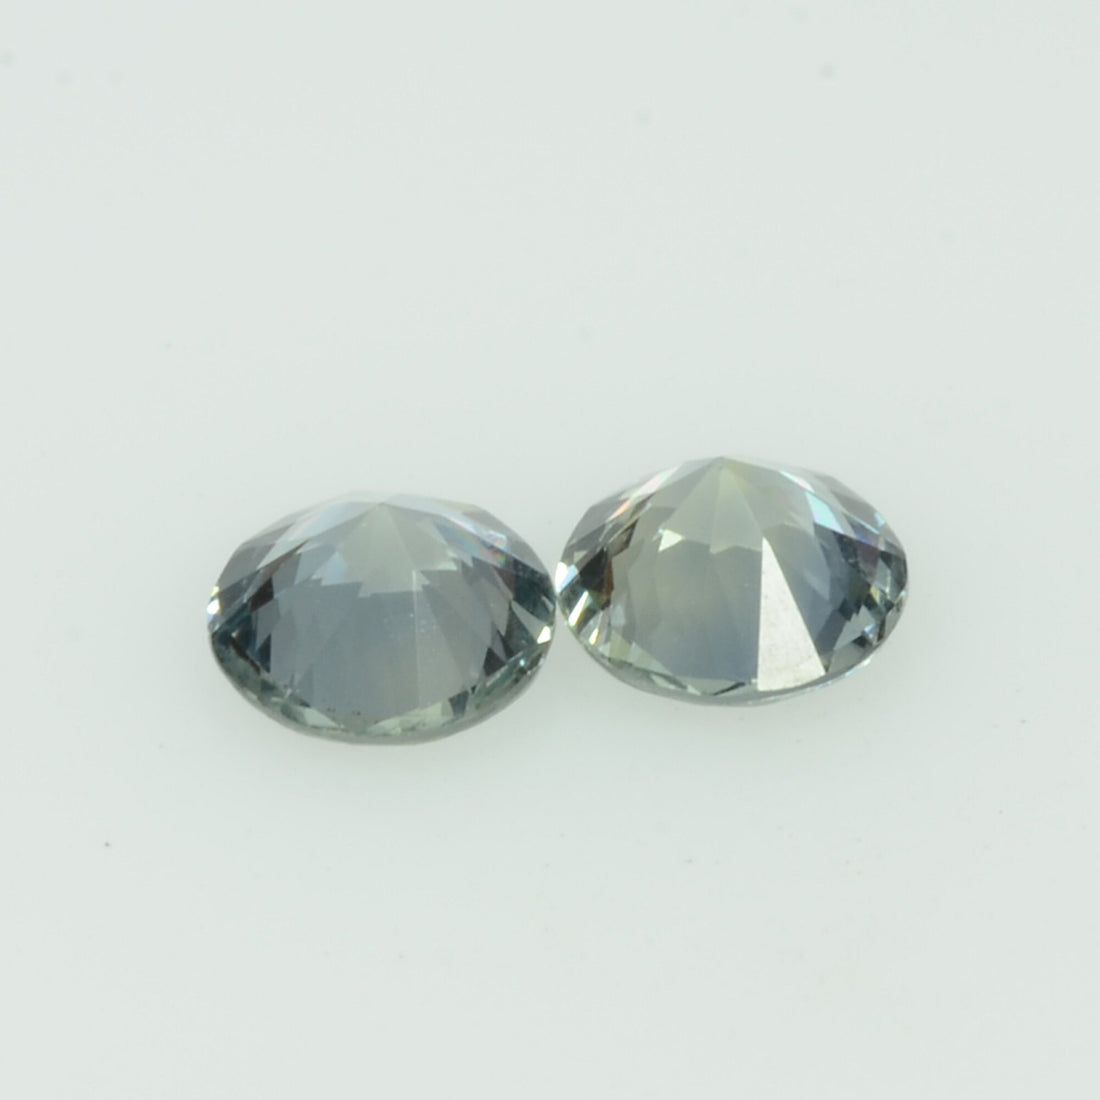 4.0 mm Natural Teal Green Sapphire Loose Pair Gemstone Round Cut